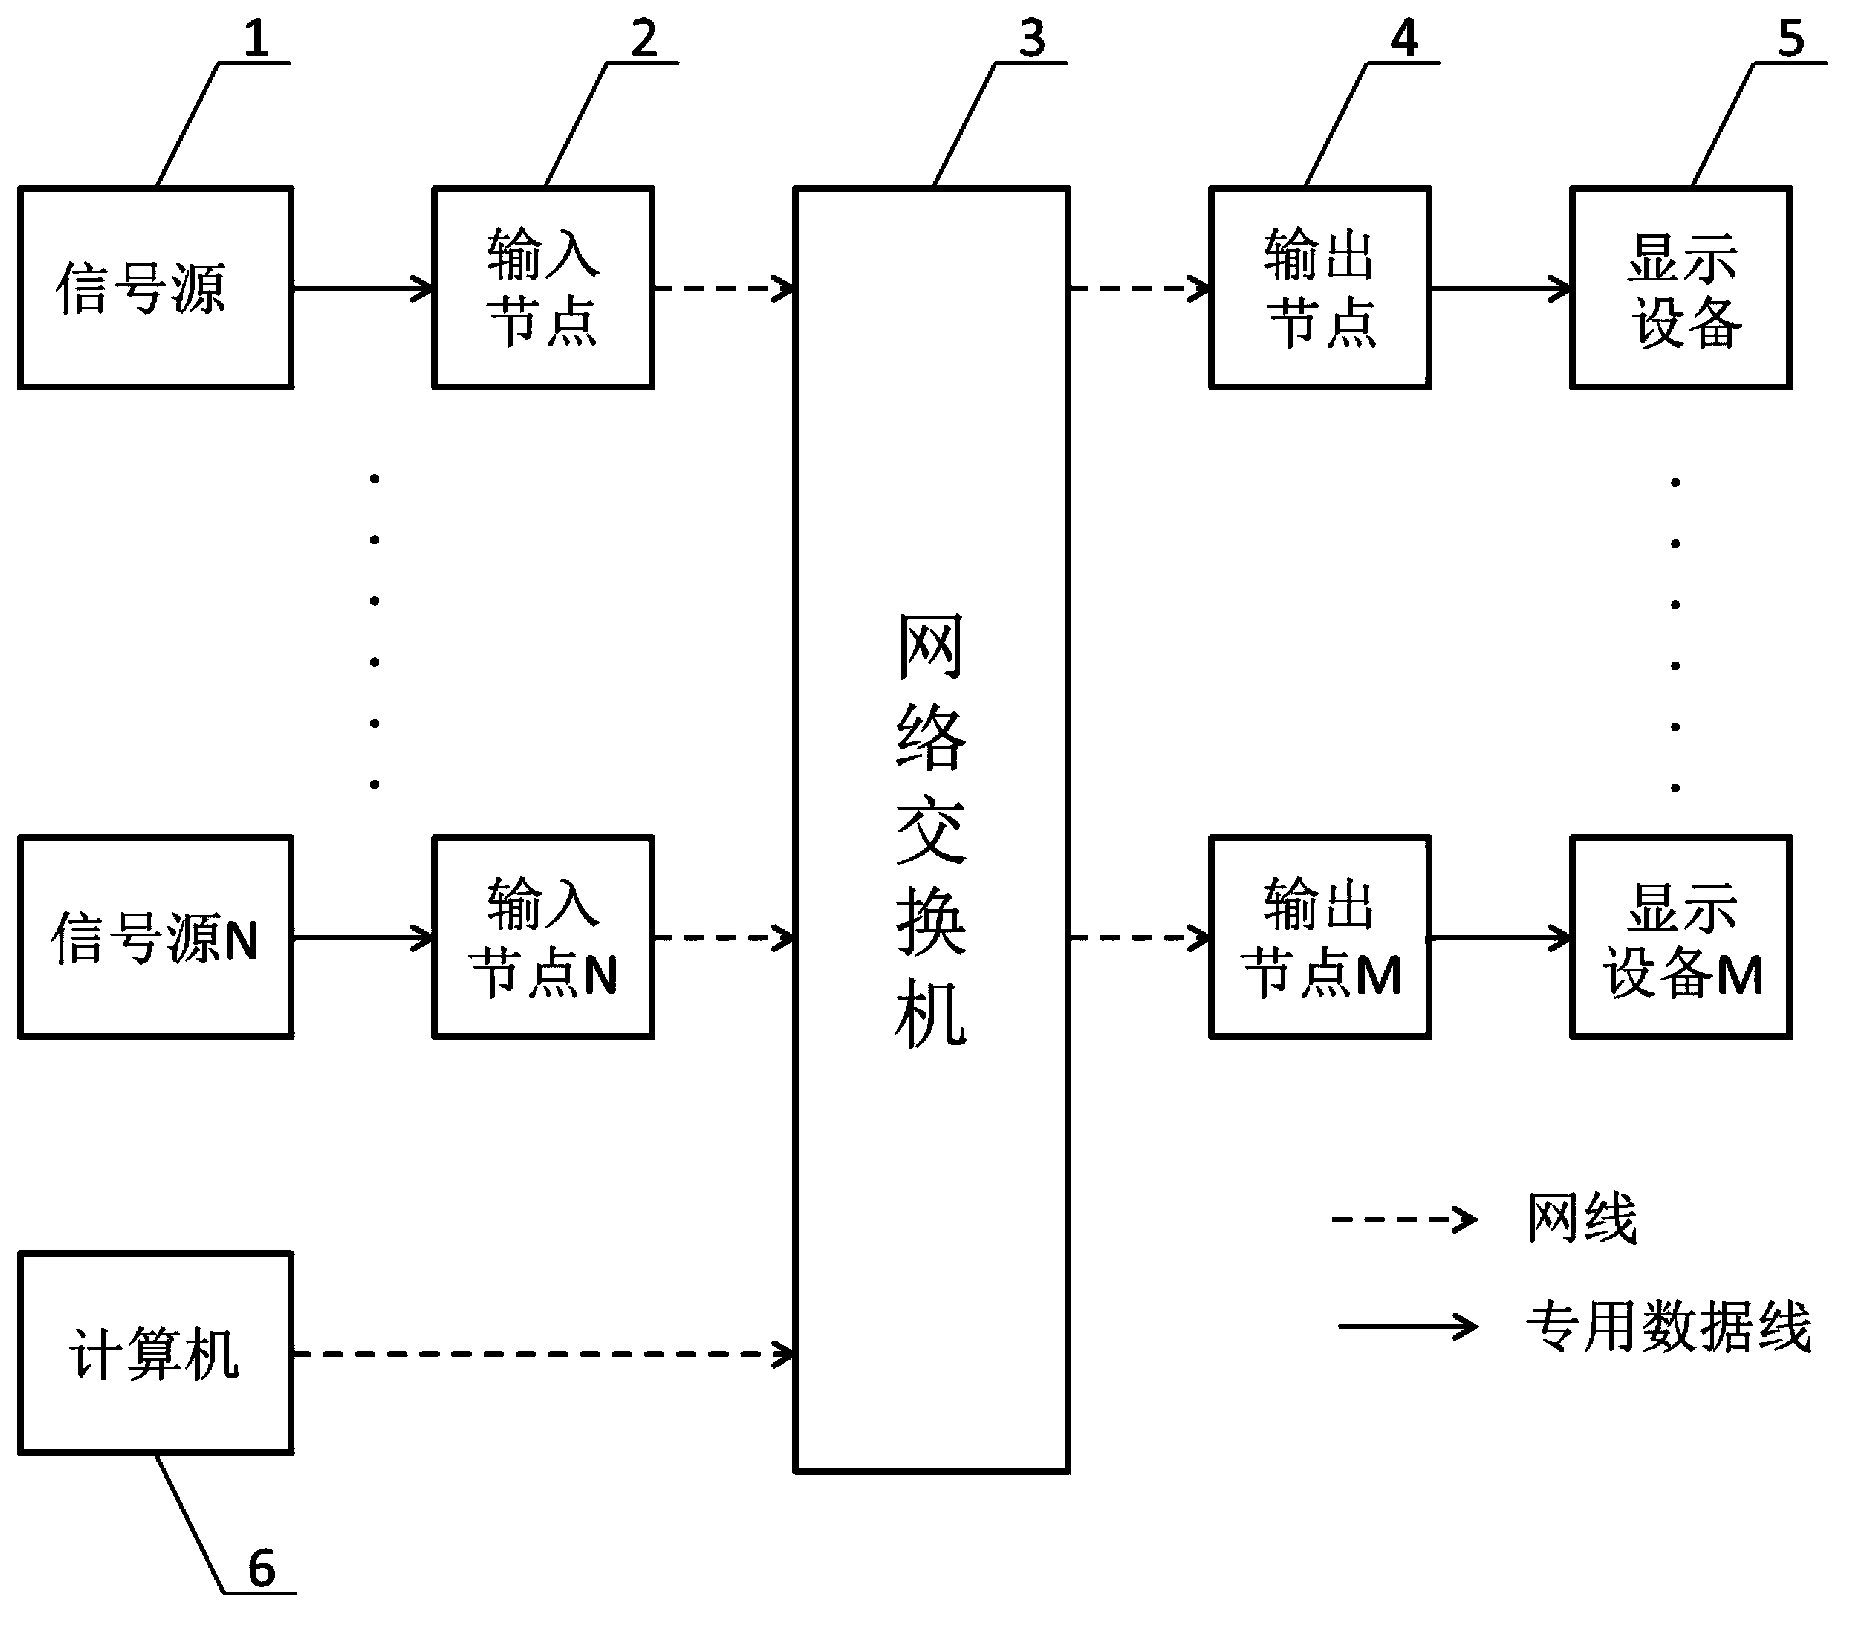 Distributed matrix switching system